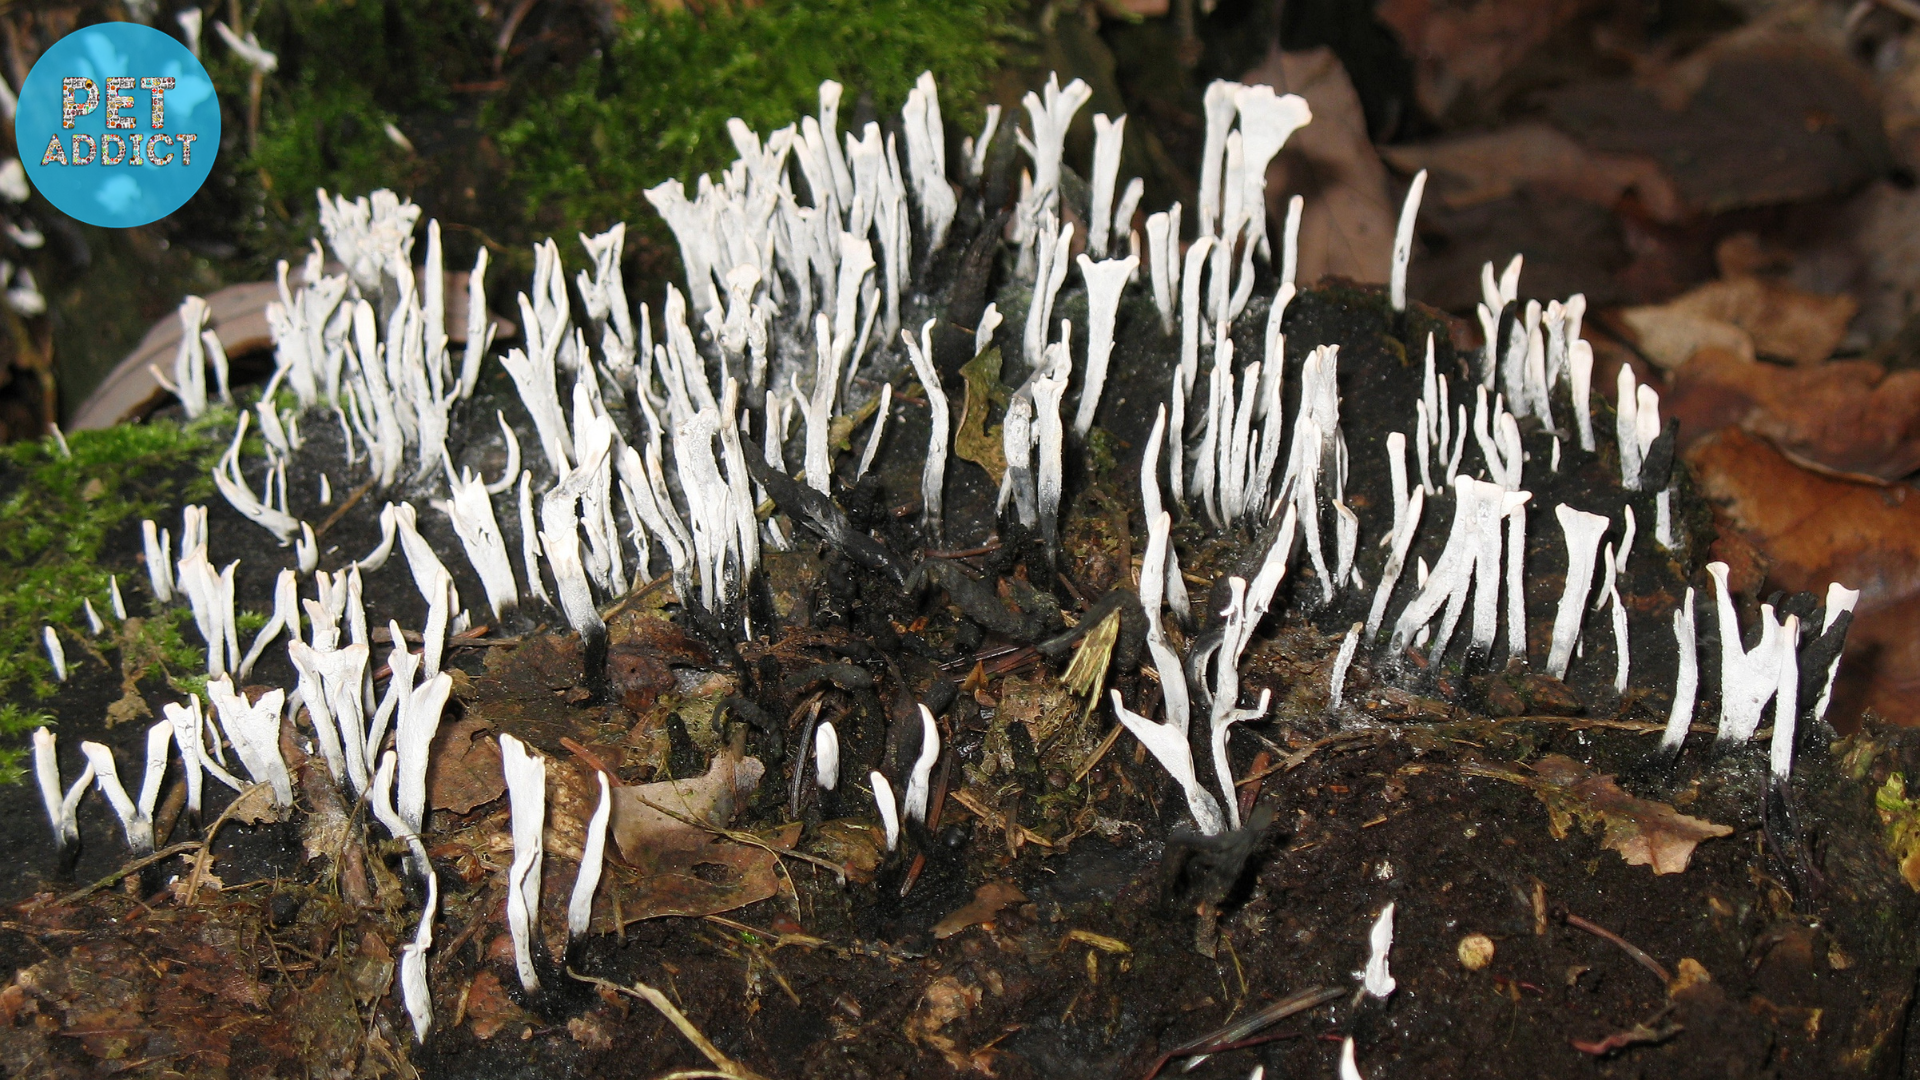 Xylaria: A Fascinating Genus of Fungi